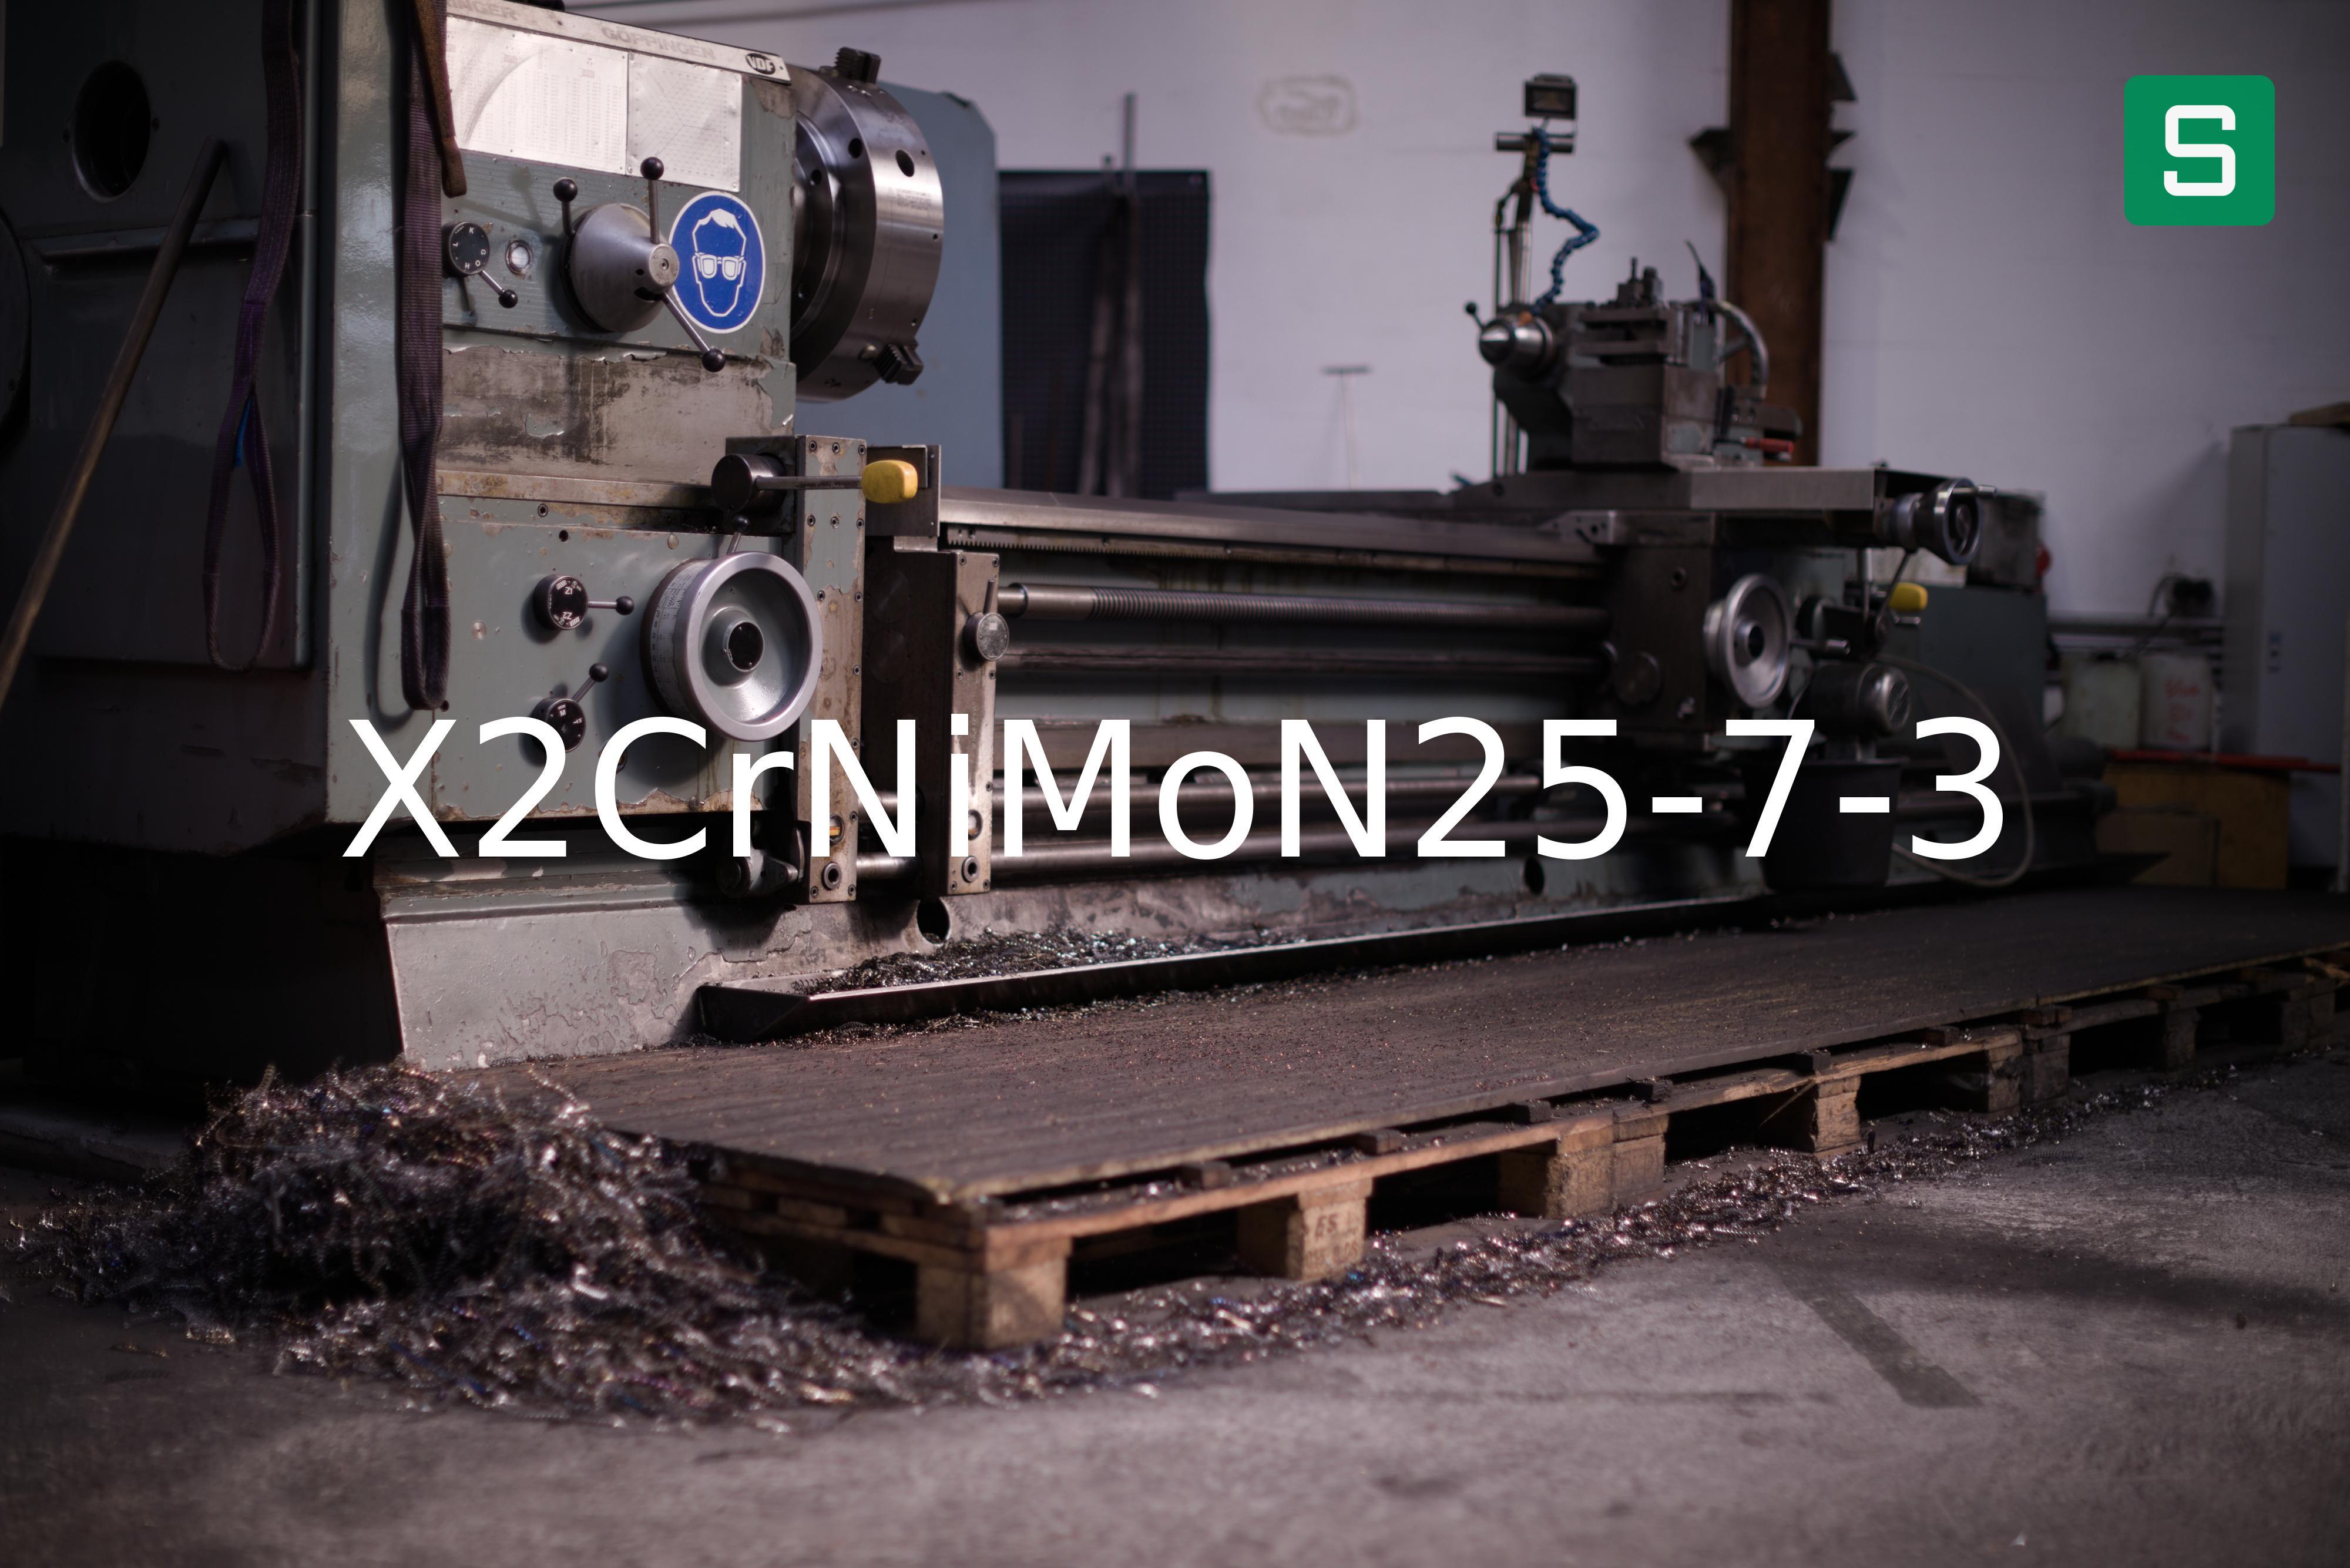 Steel Material: X2CrNiMoN25-7-3